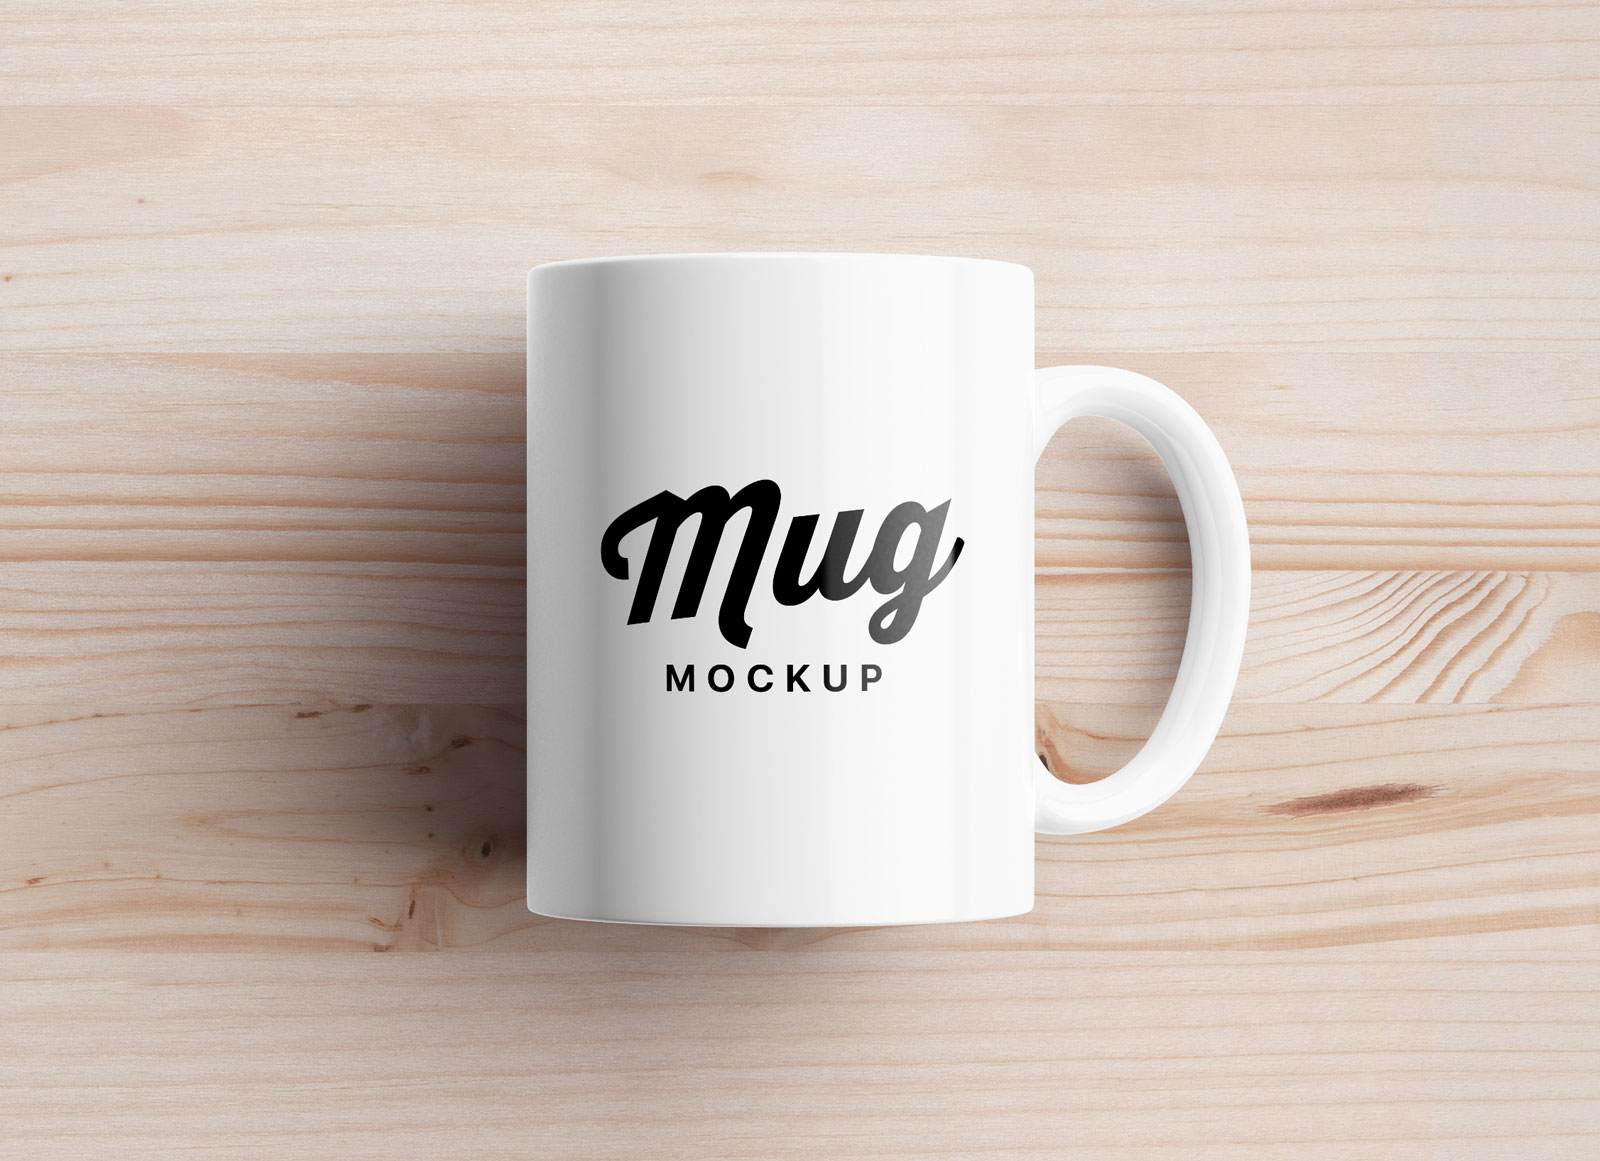 Download Free Mockups Mockup Aluminum Mug Free Psd : Mug on Table ...